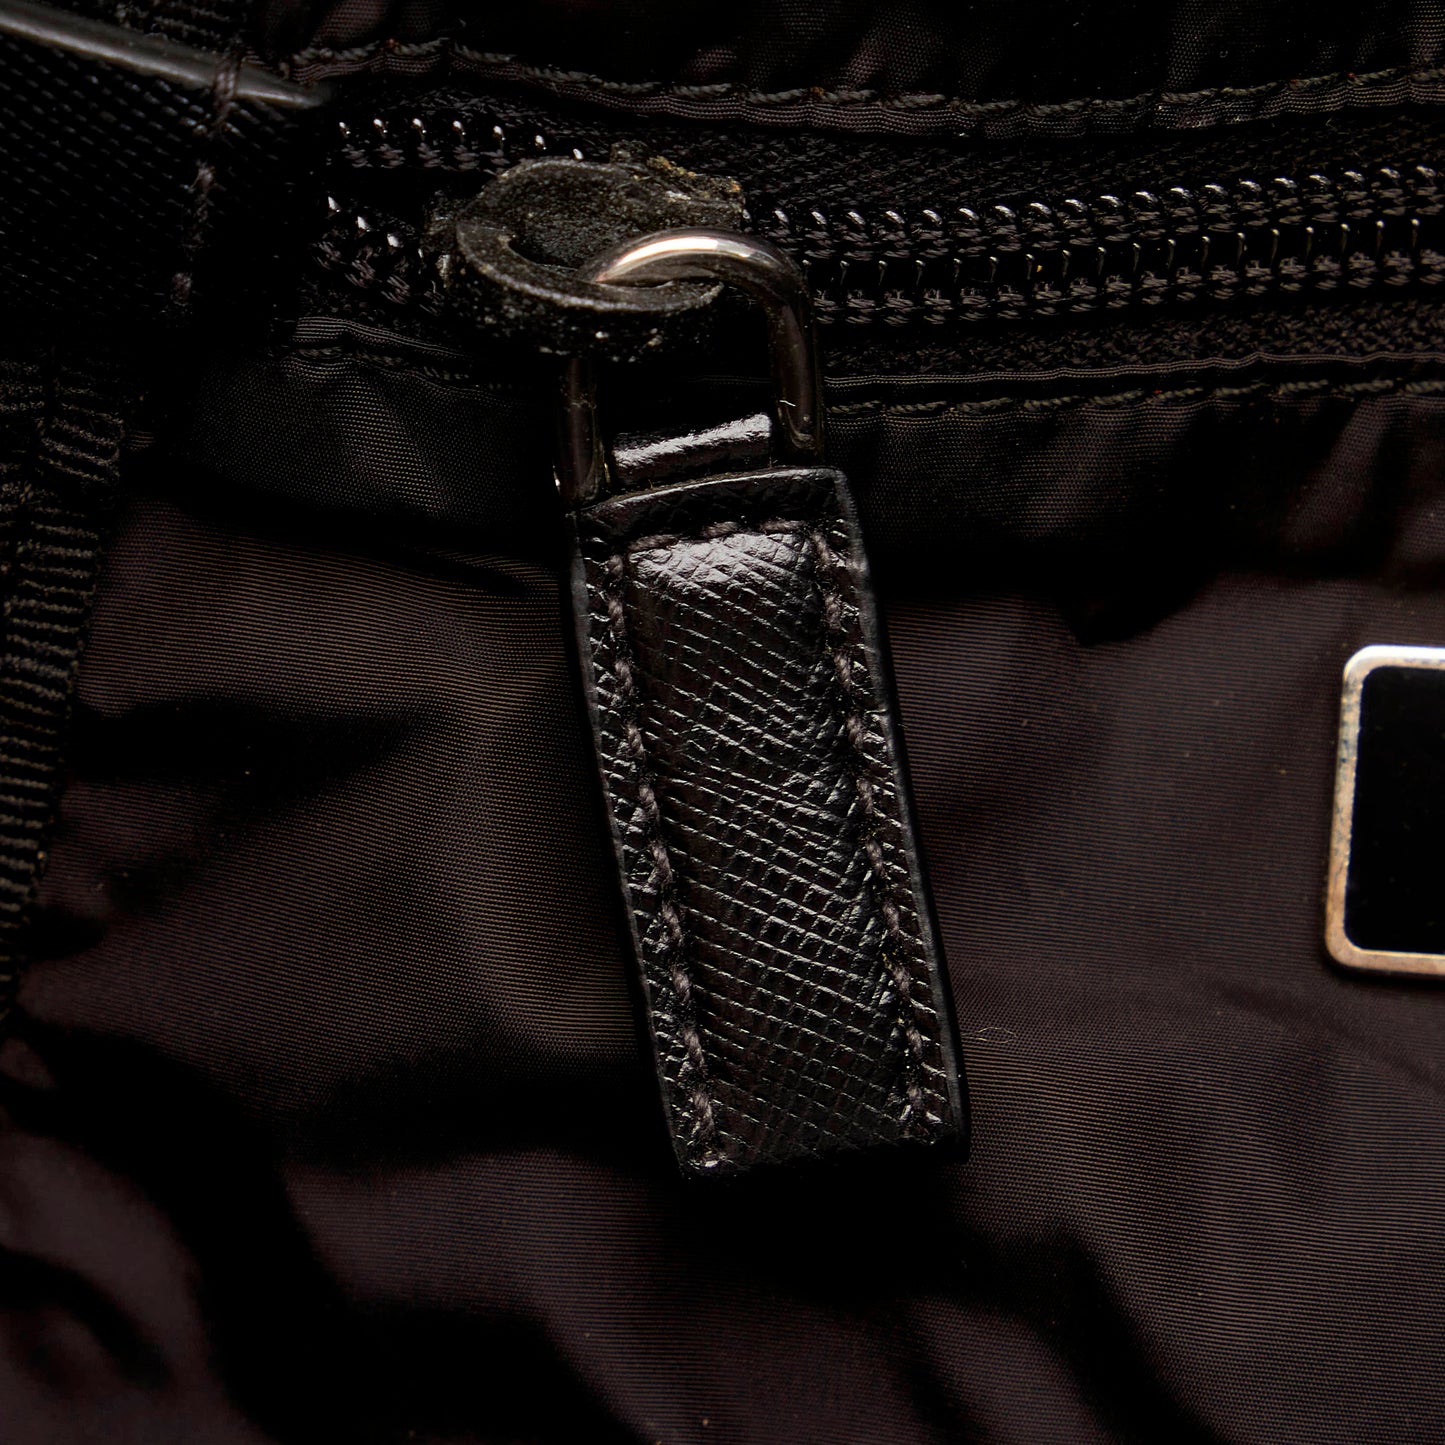 Tessuto Stampato Drawstring Backpack